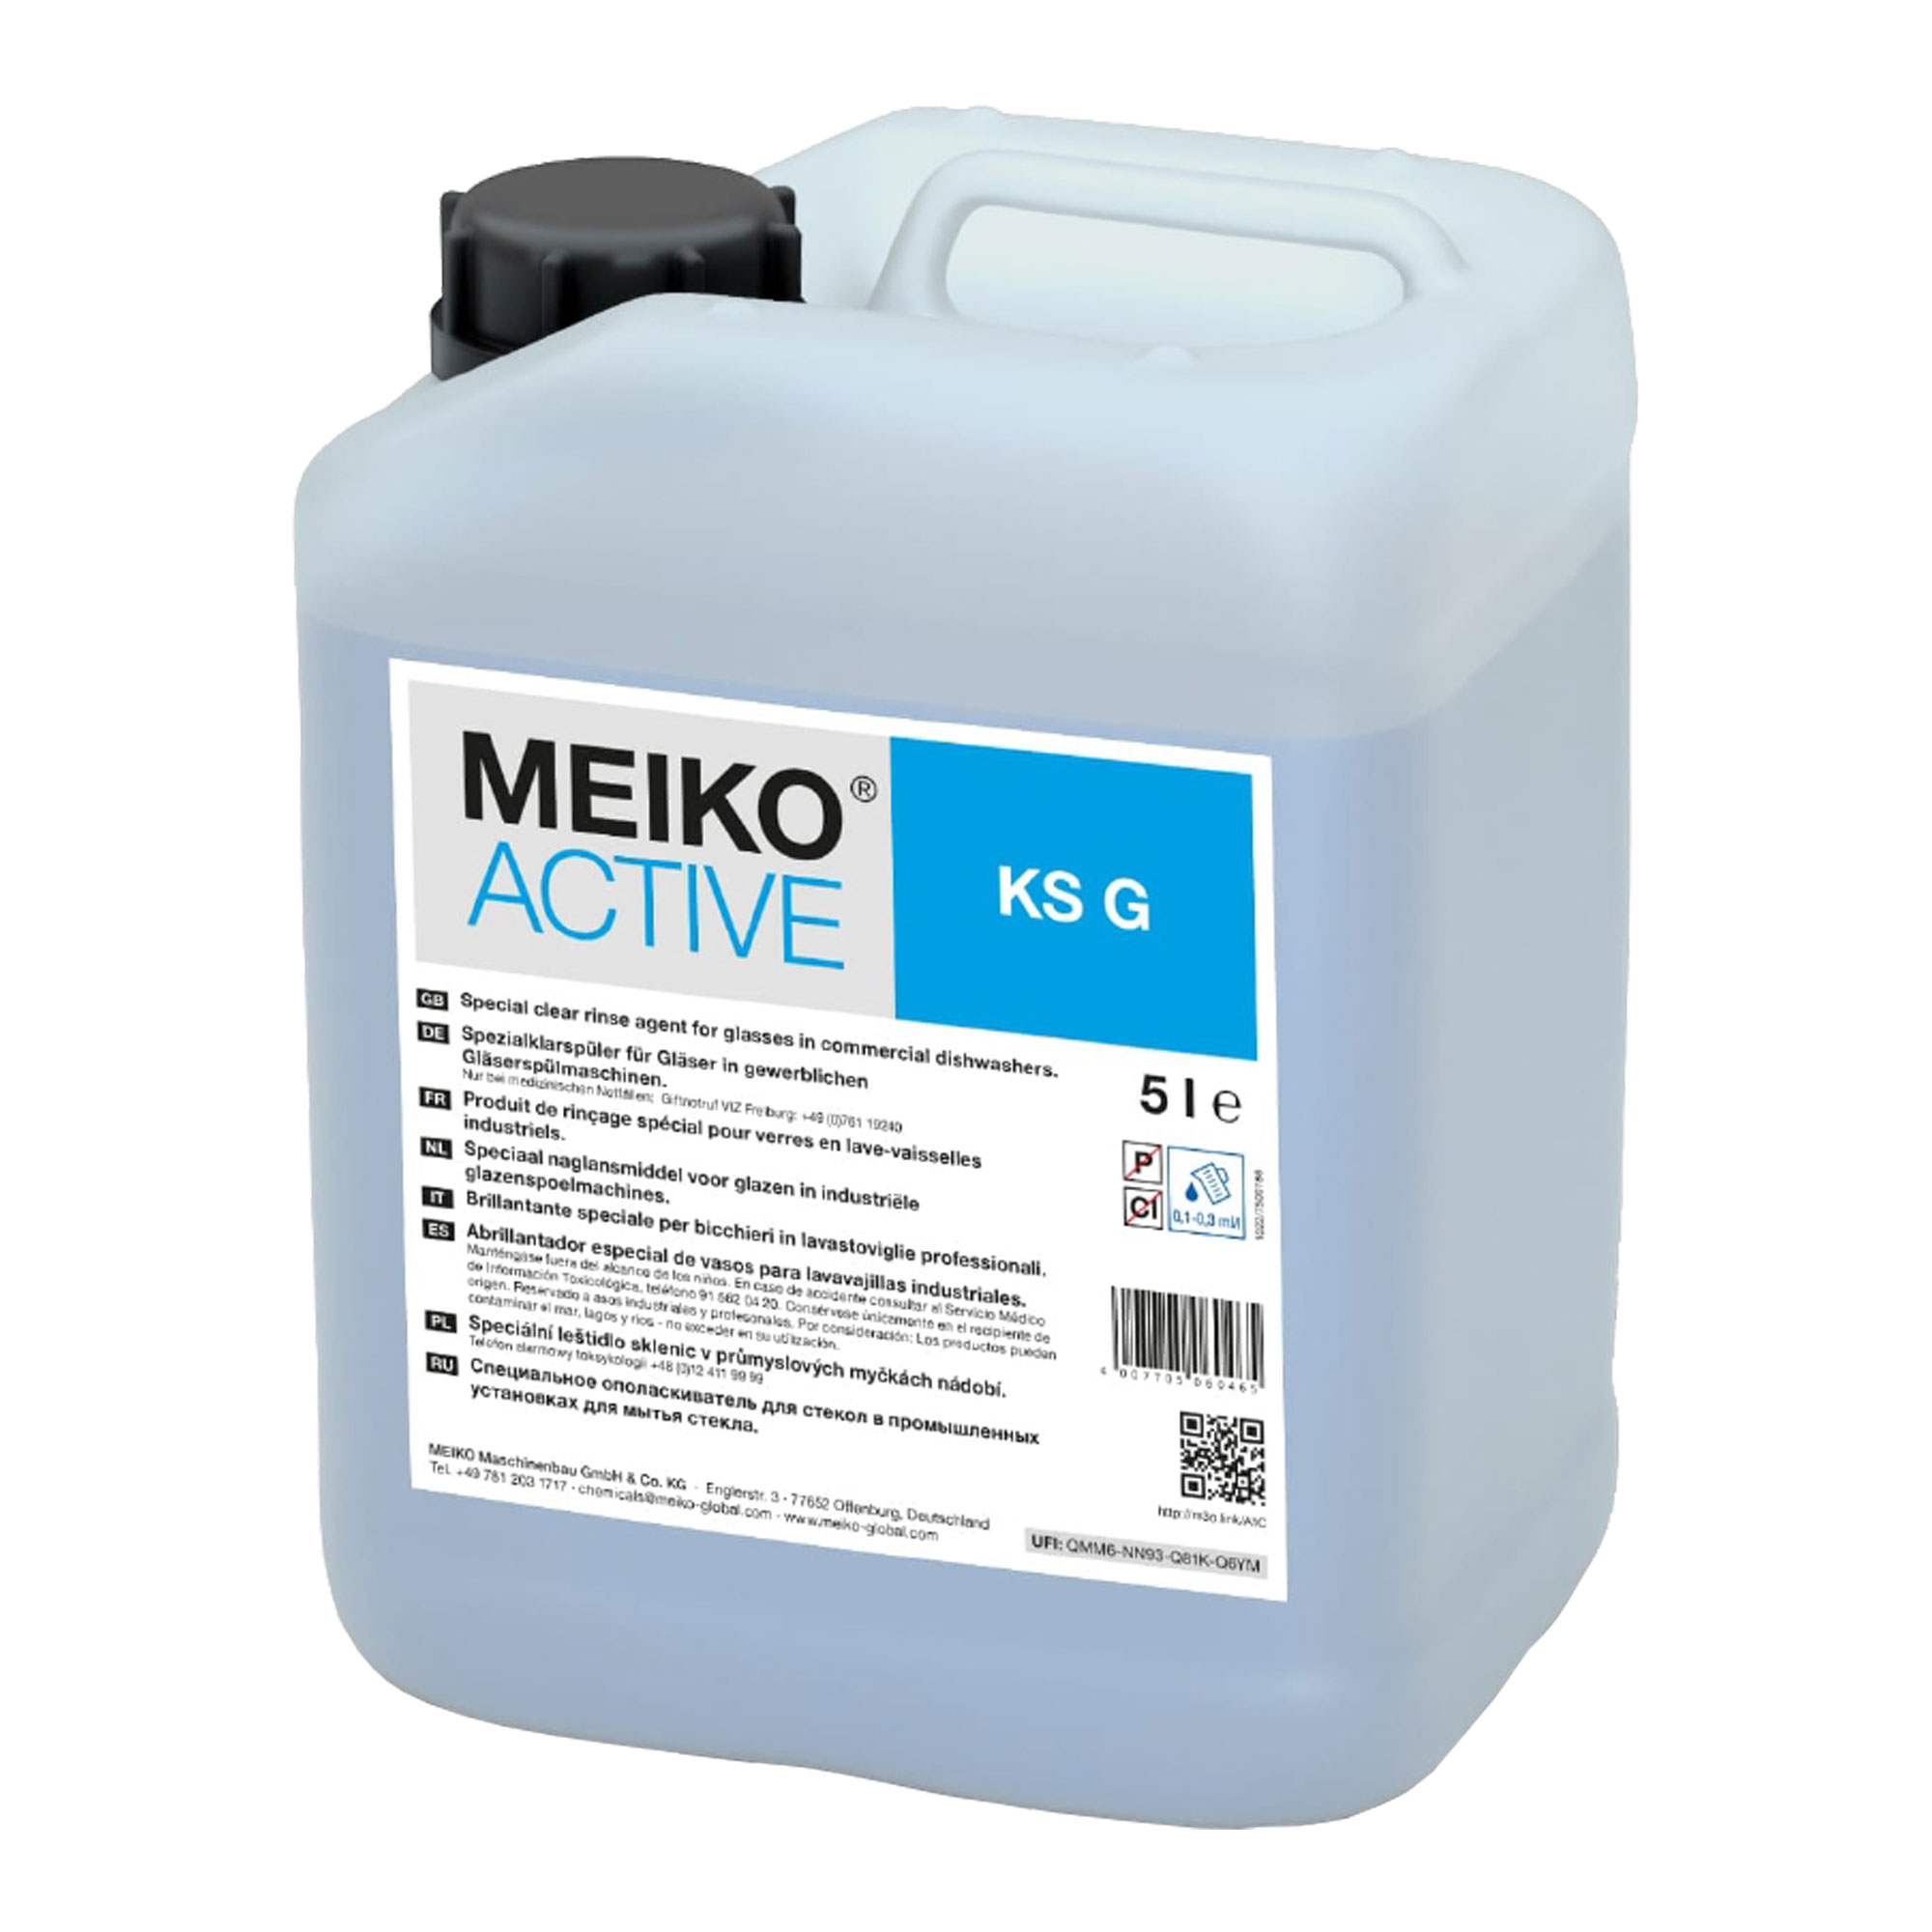 Meiko Active KS G Spezial-Klarspüler für Gläser